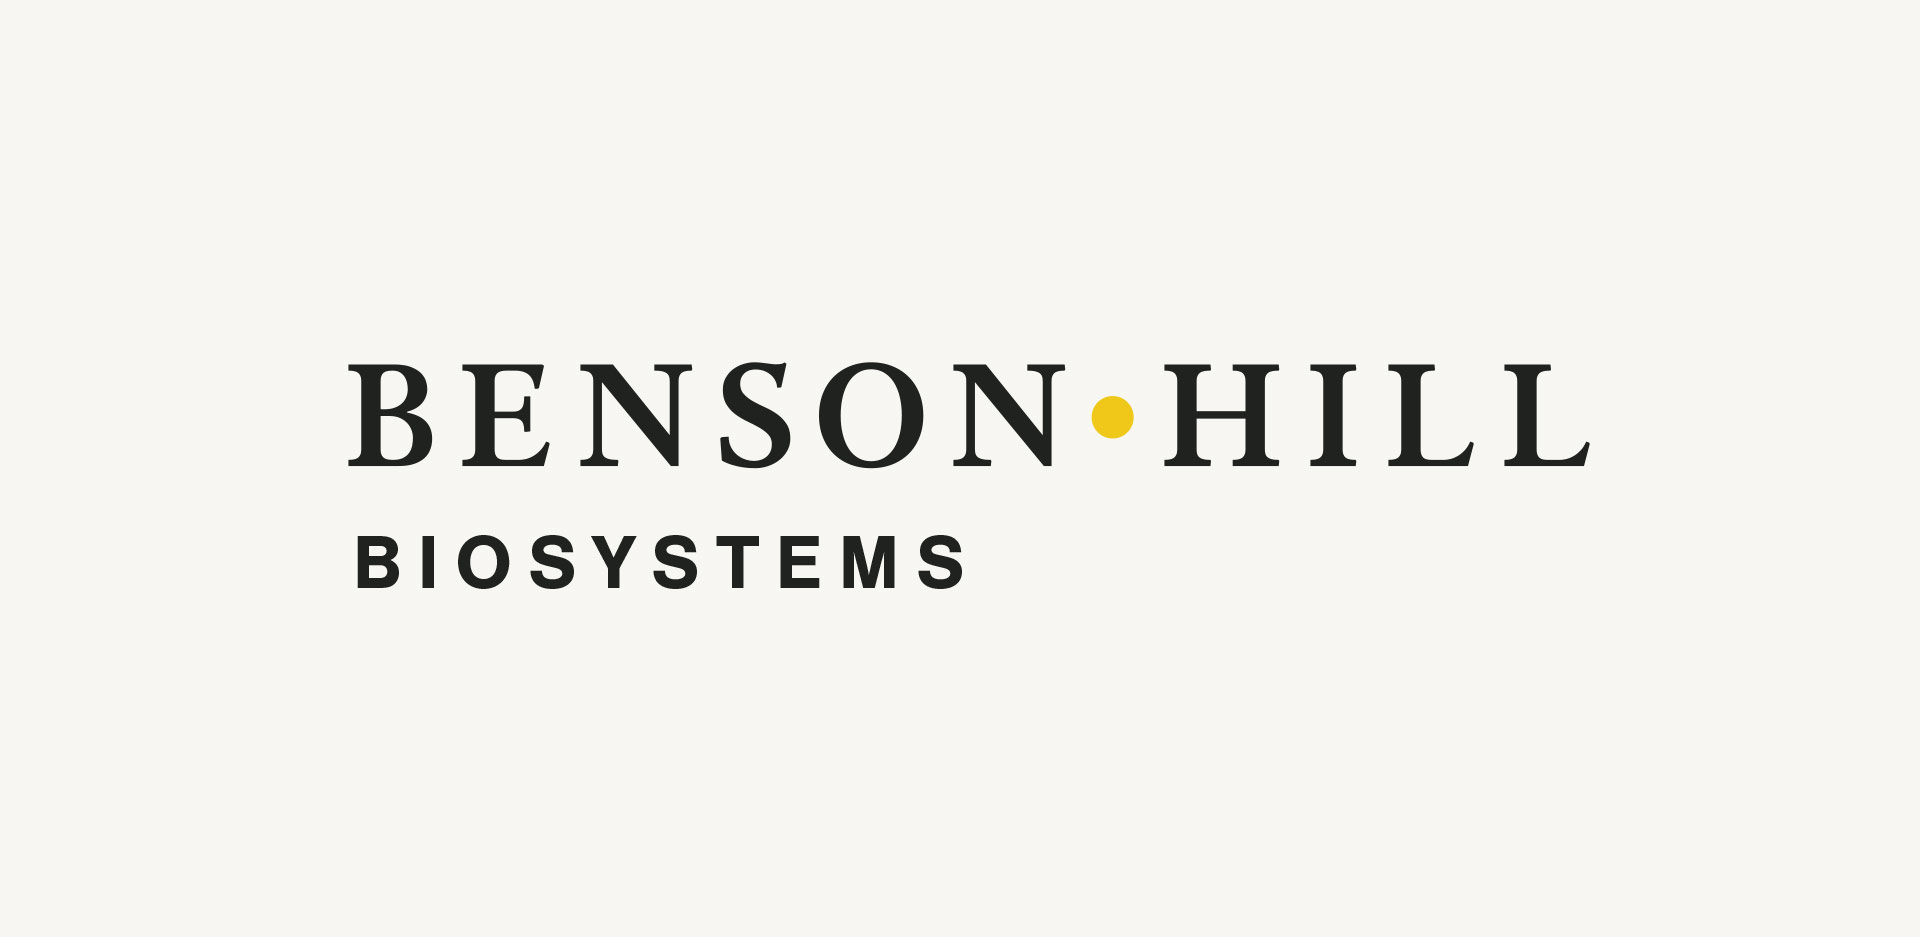 Benson Hill Biosystems